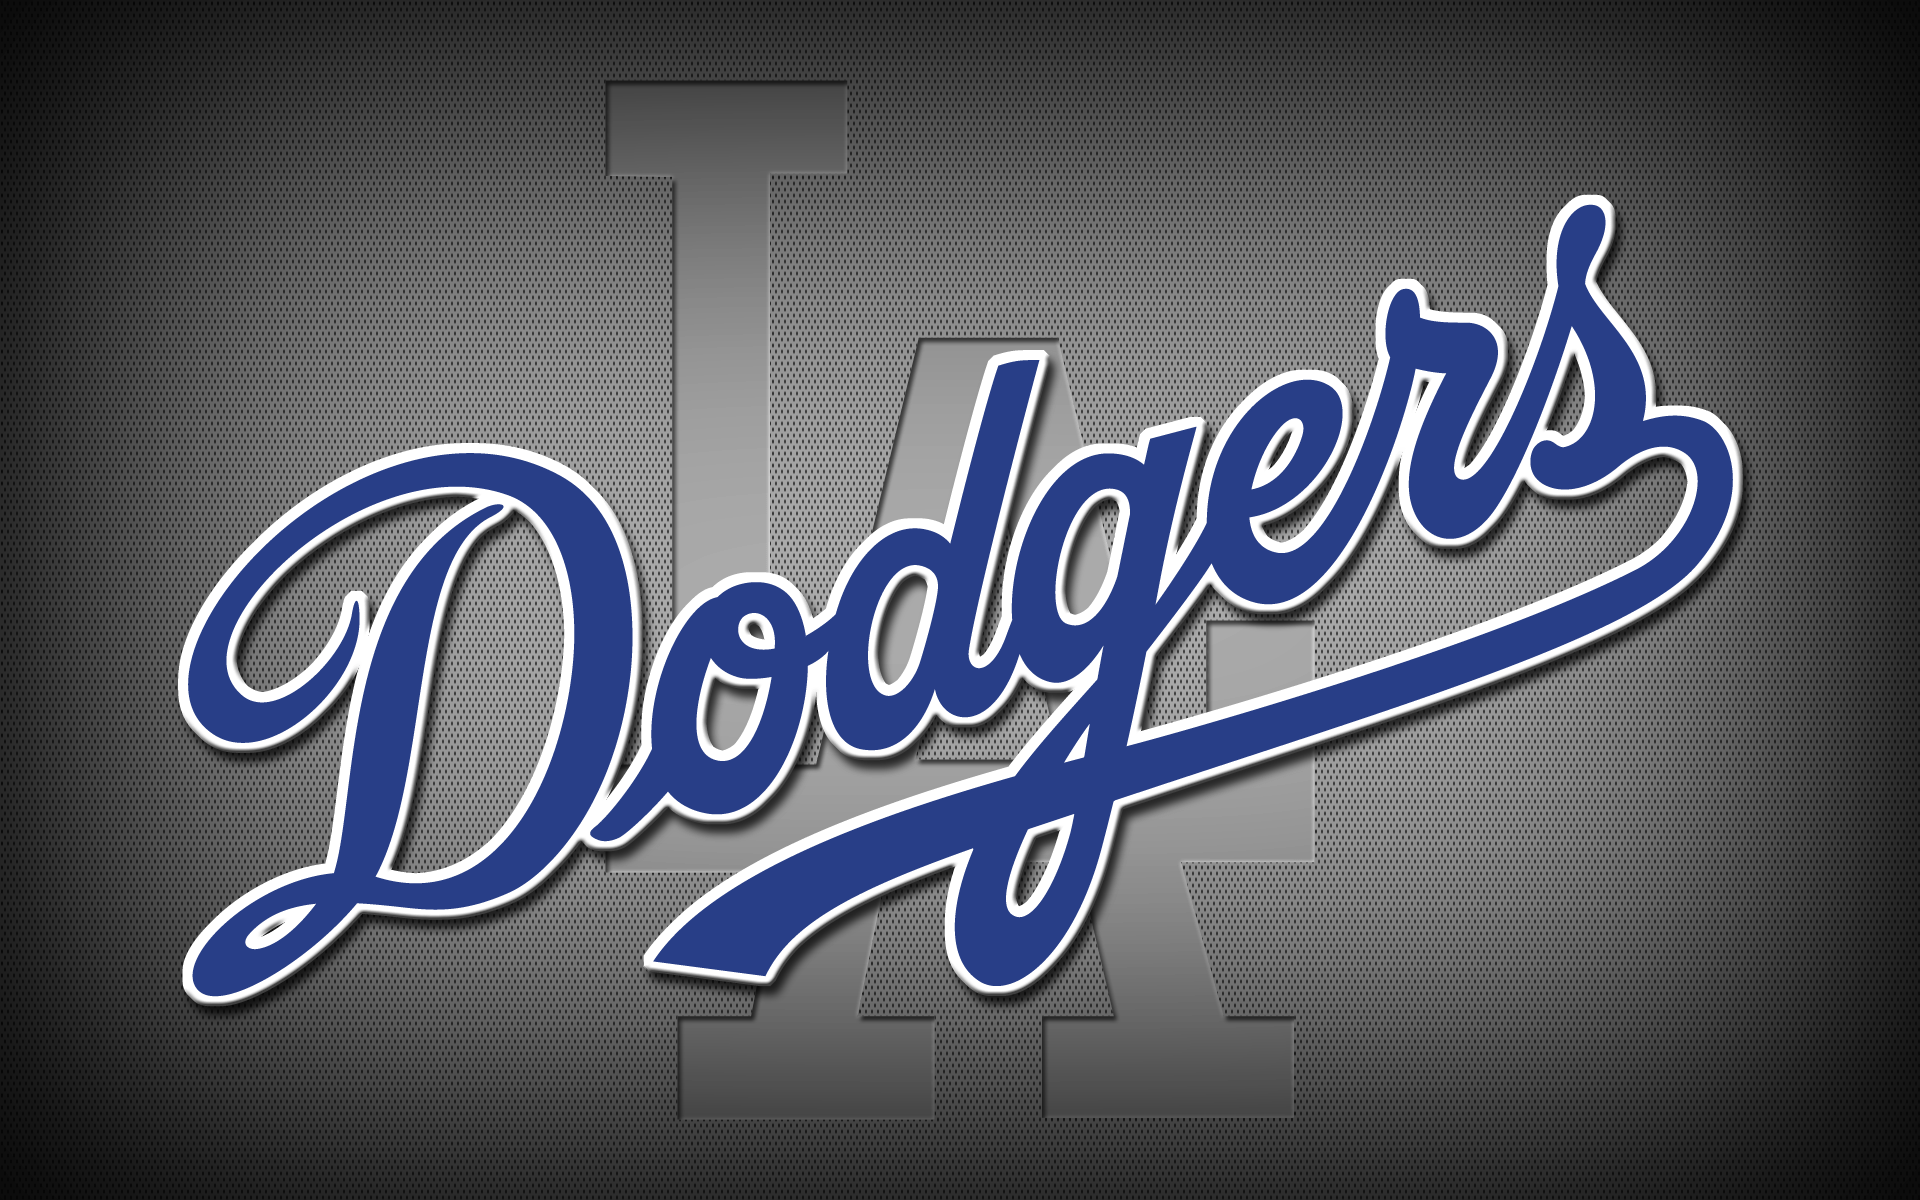 LA Dodgers wallpaper by chuck1258 - Download on ZEDGE™